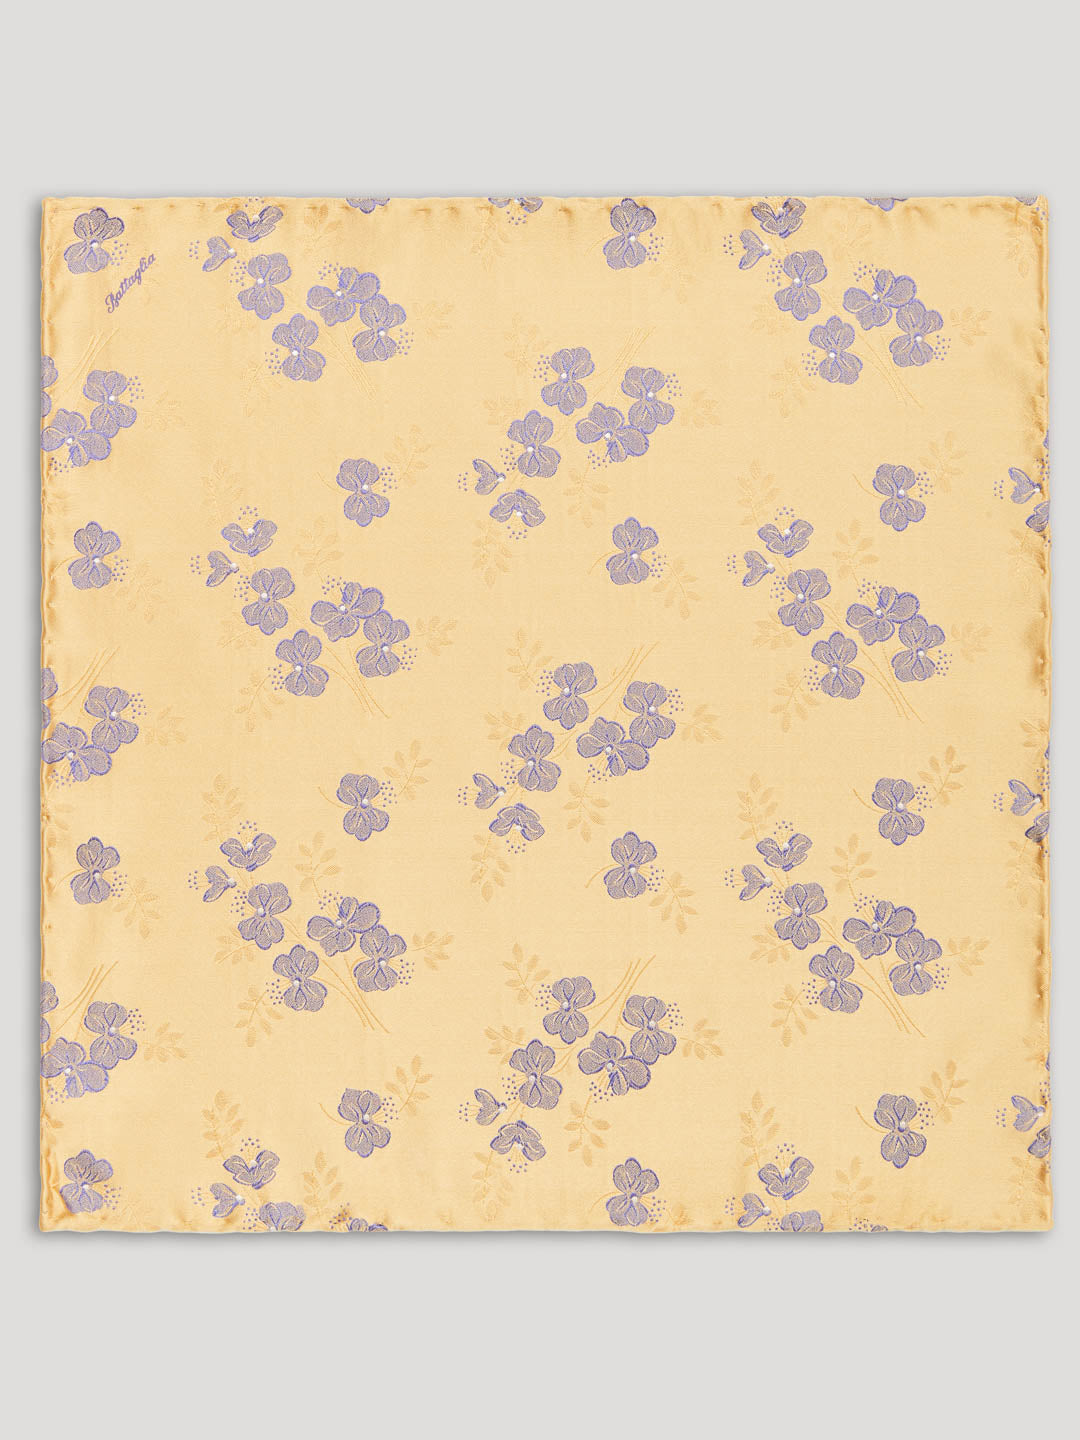 Yellow handkerchief with purple flowers on it. 